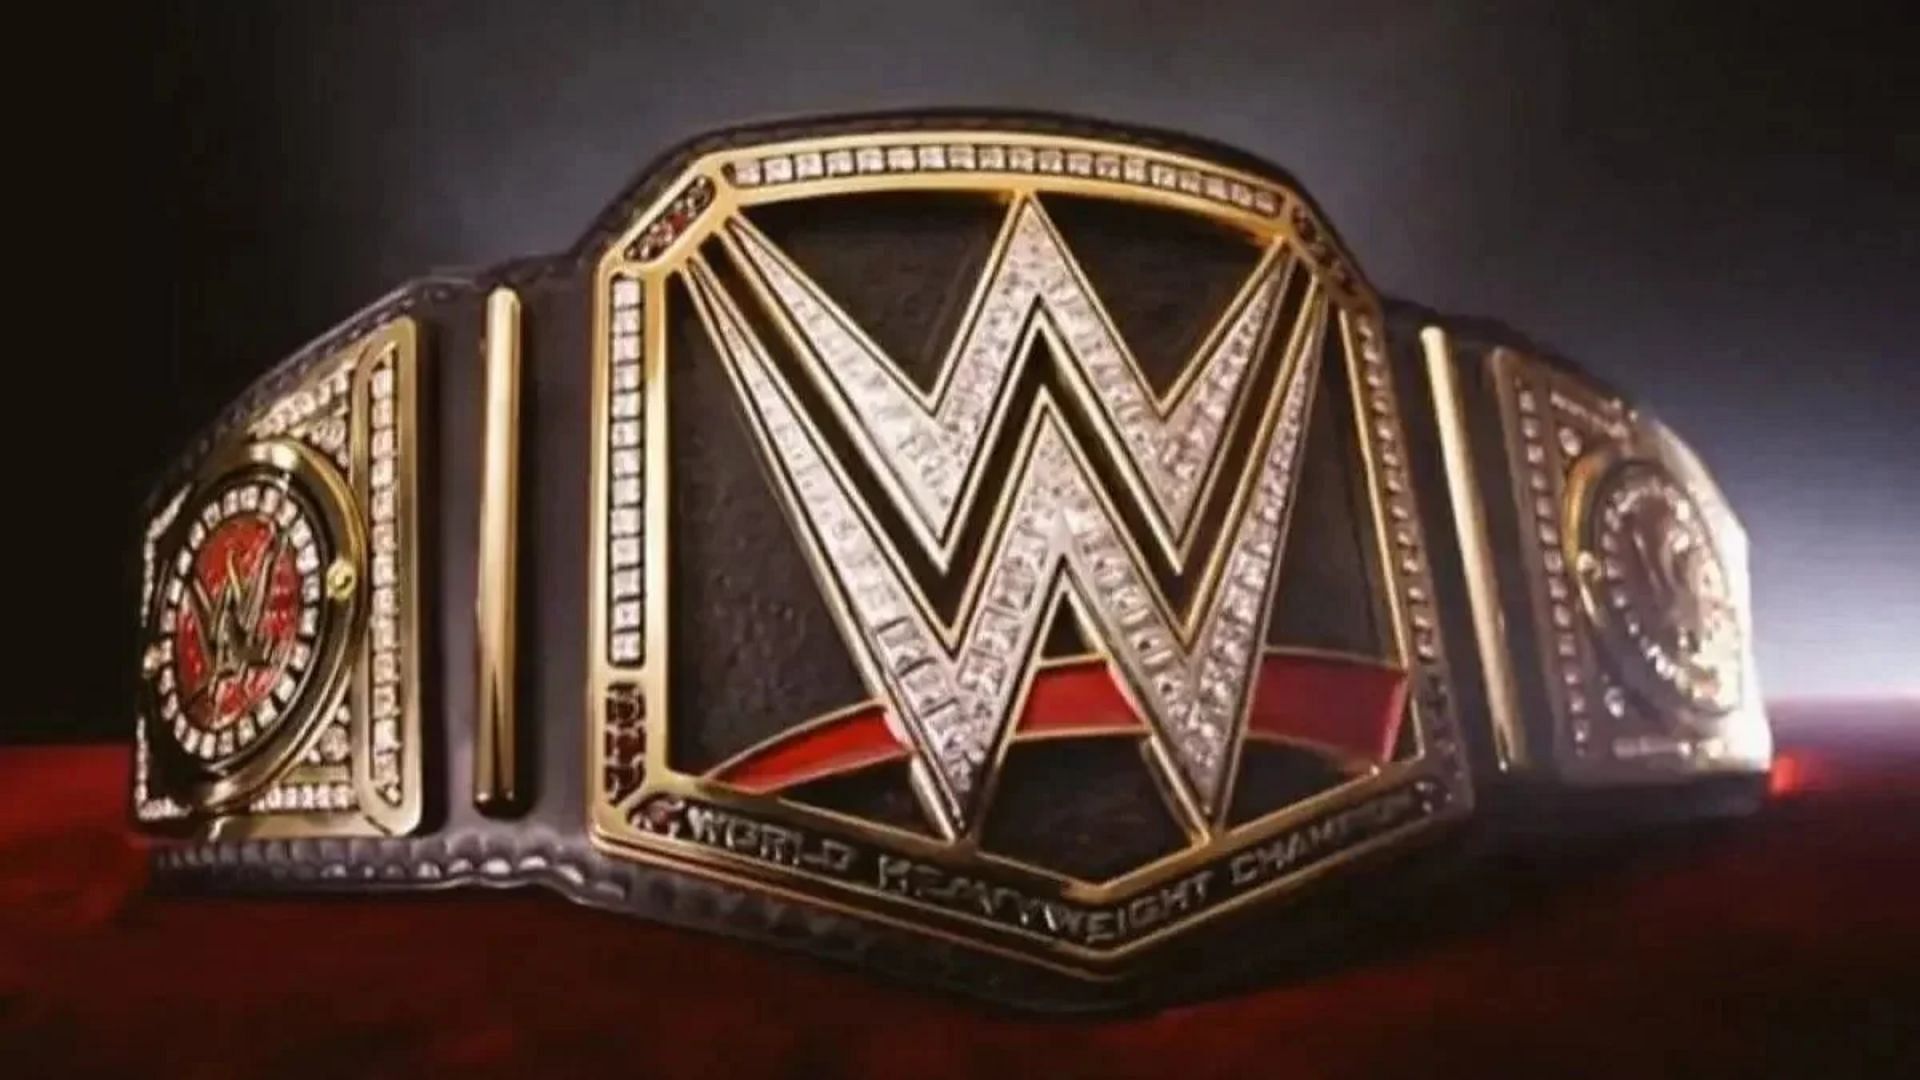 The prestigious WWE Championship belt